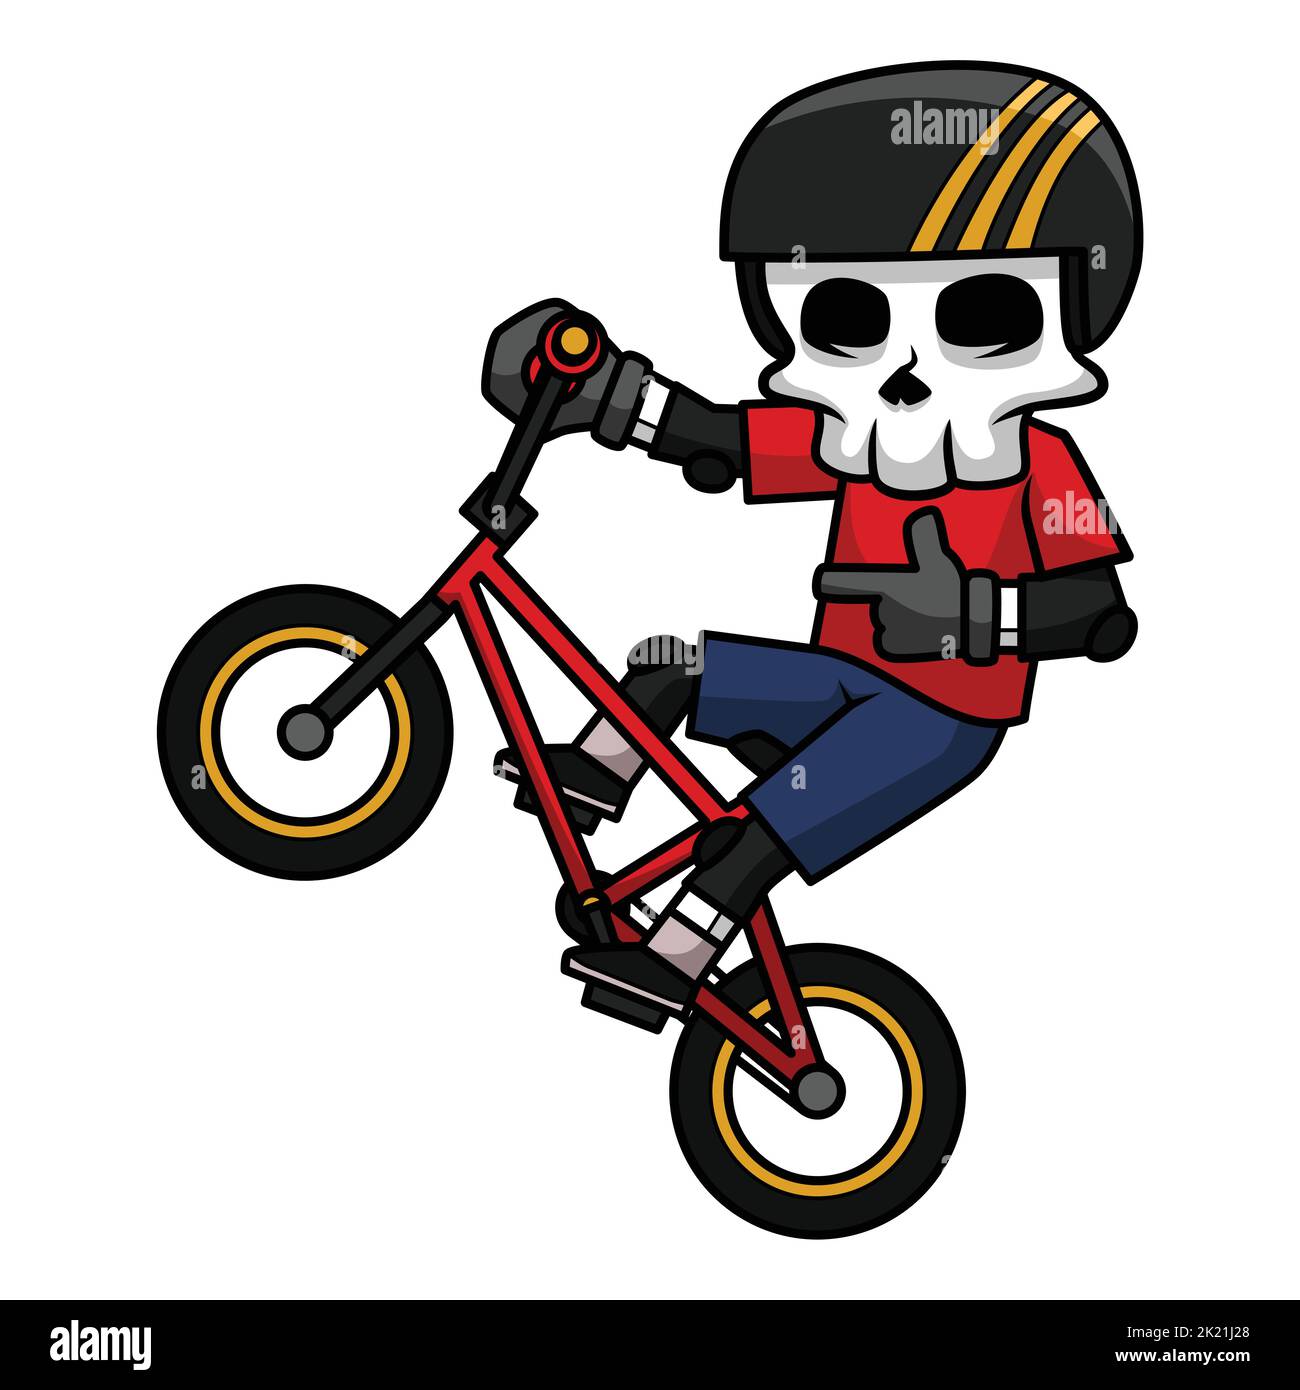 Skull BMX Rider Wears a Helmet And Pads On Knees And Elbows Doing a Wheelie. Skull Cartoon Illustration. Stock Vector